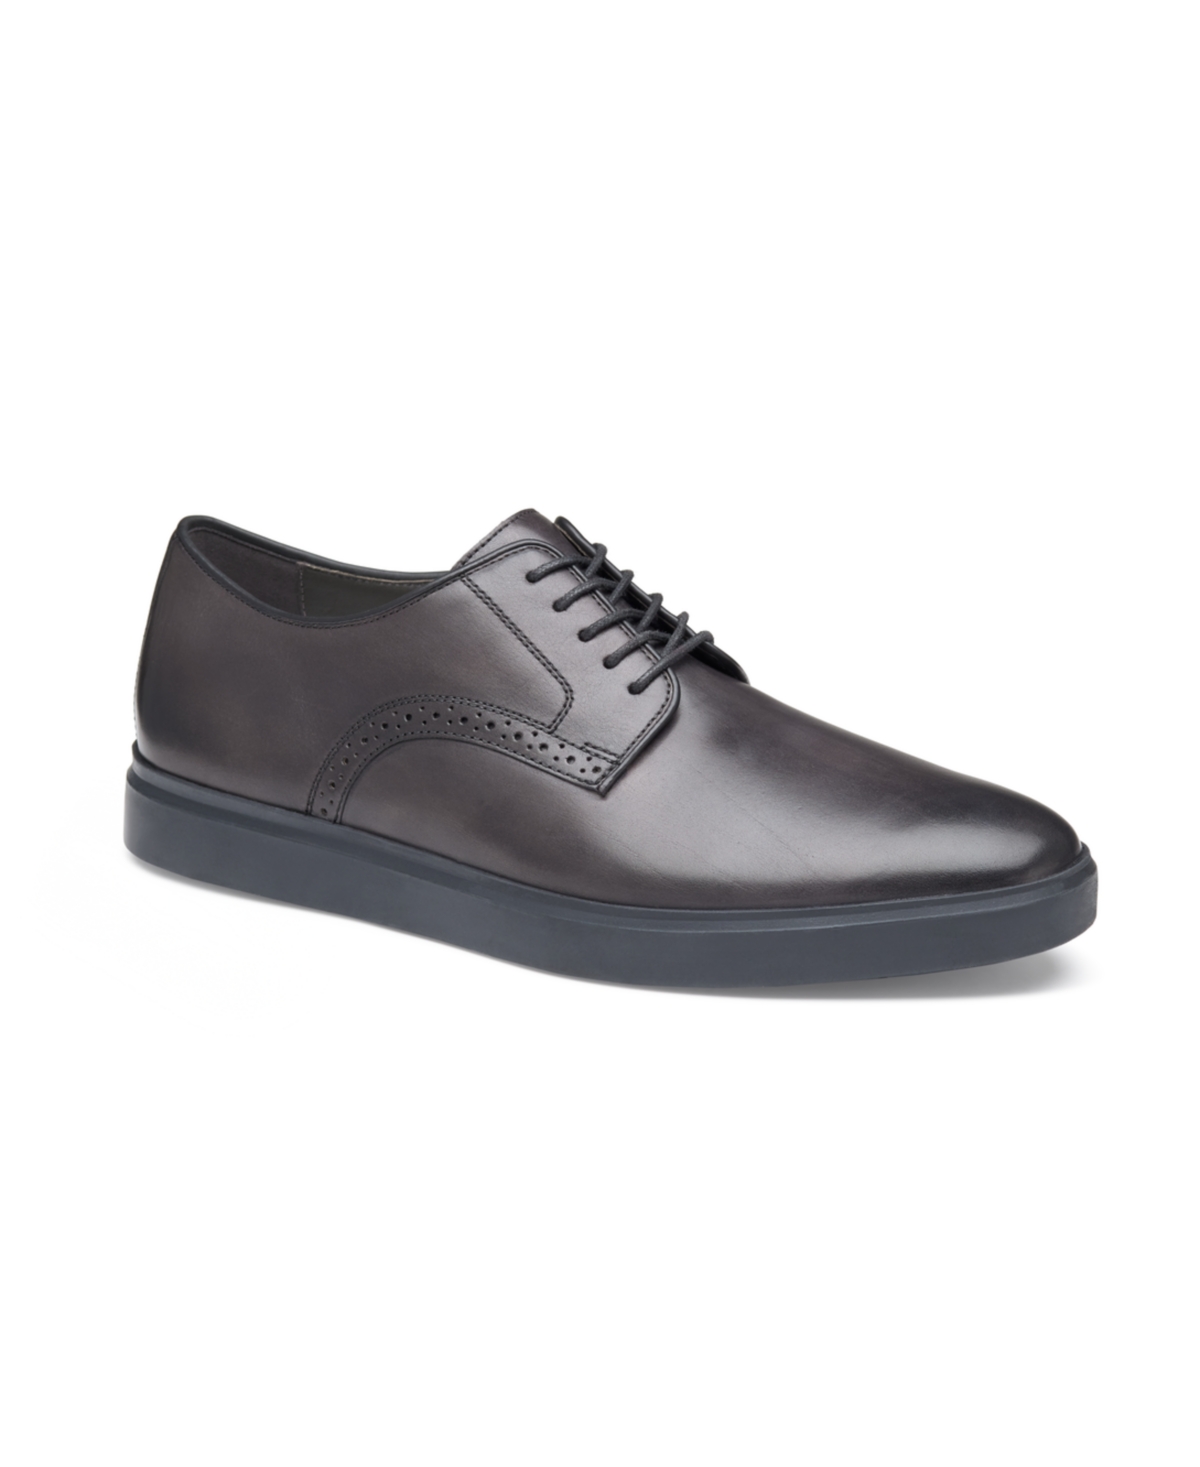 Men's Brody Plain Toe Lace Up Dress Casual Shoes - Black